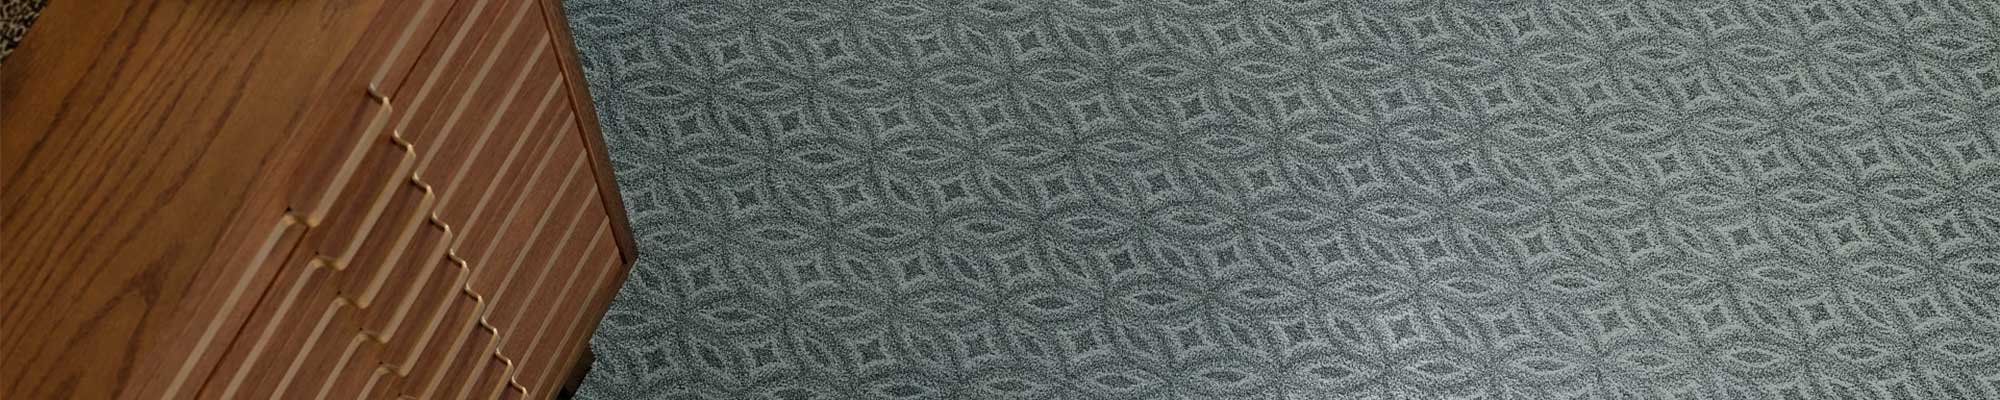 Anderson-Tuftex Carpet